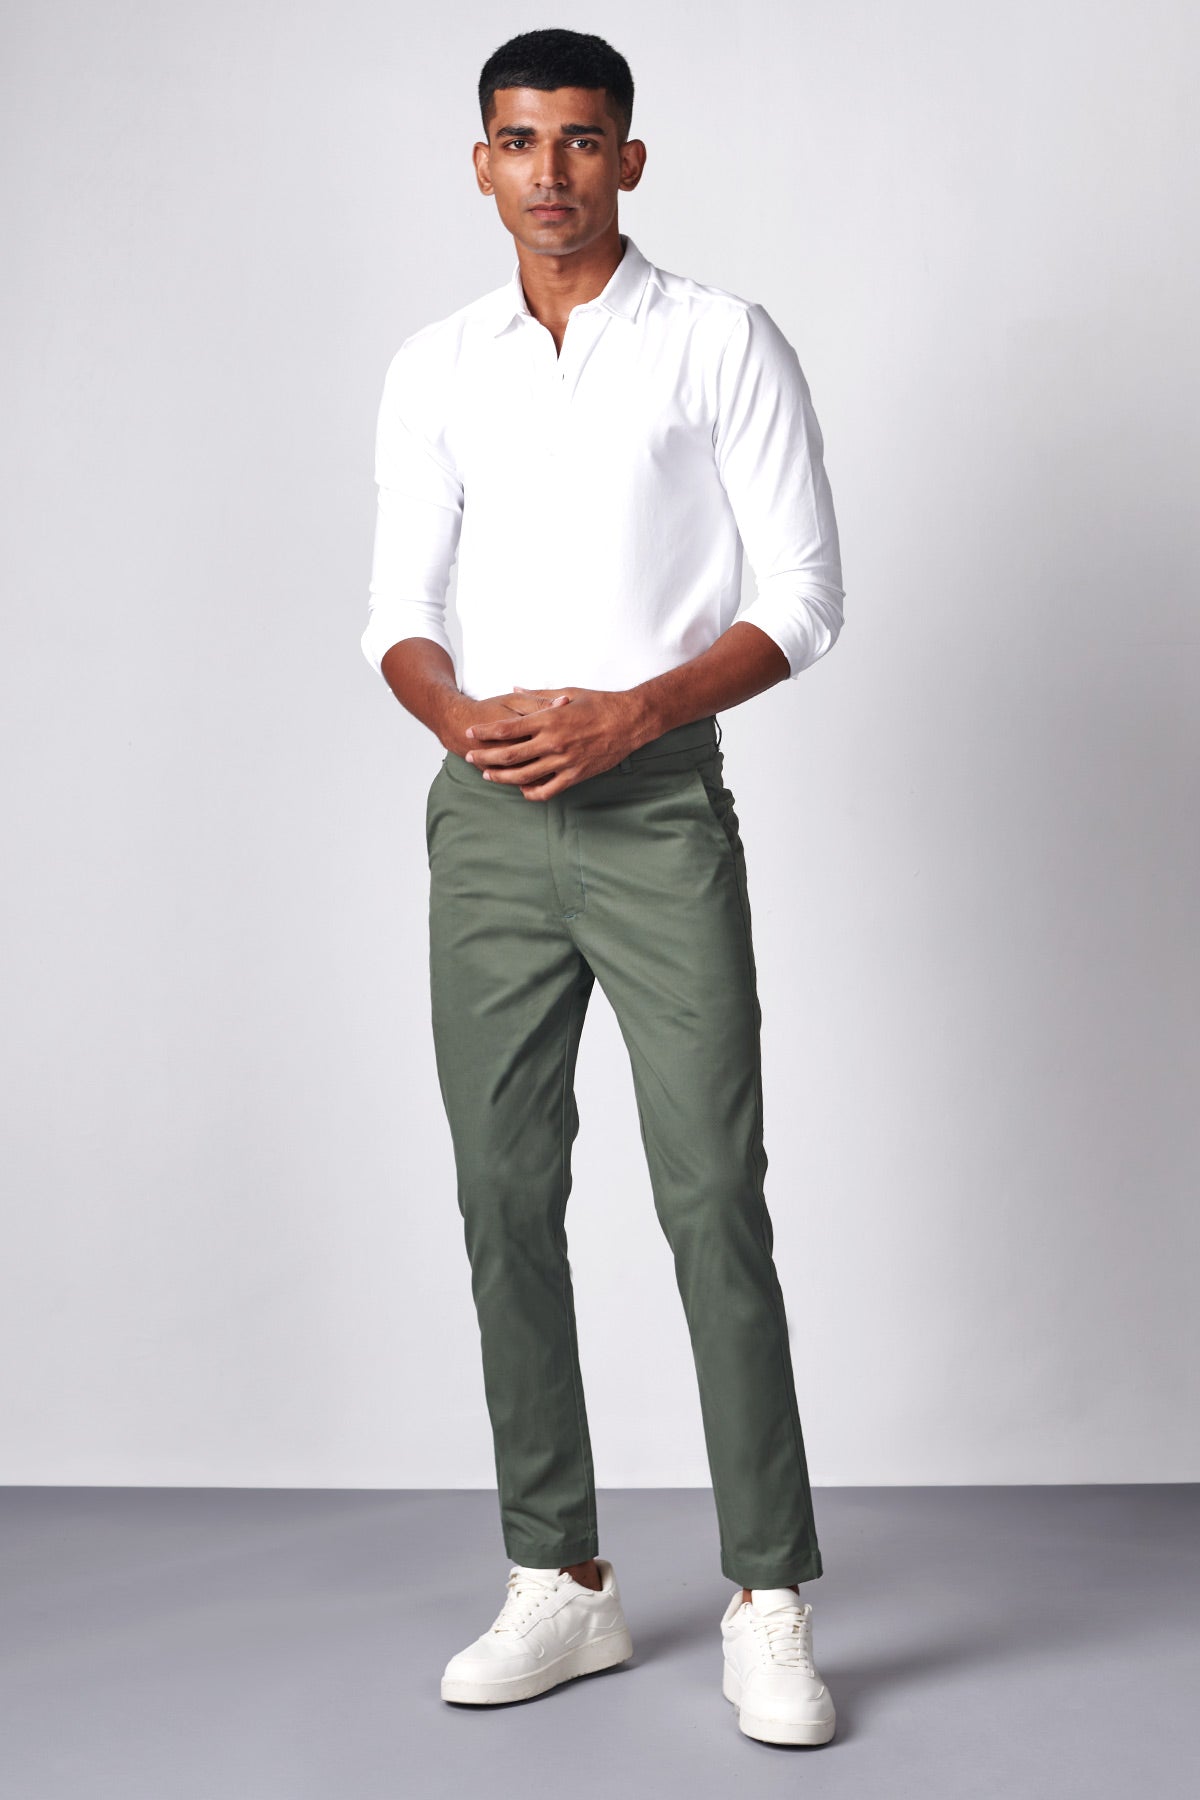 The 24 Fern Green Trouser